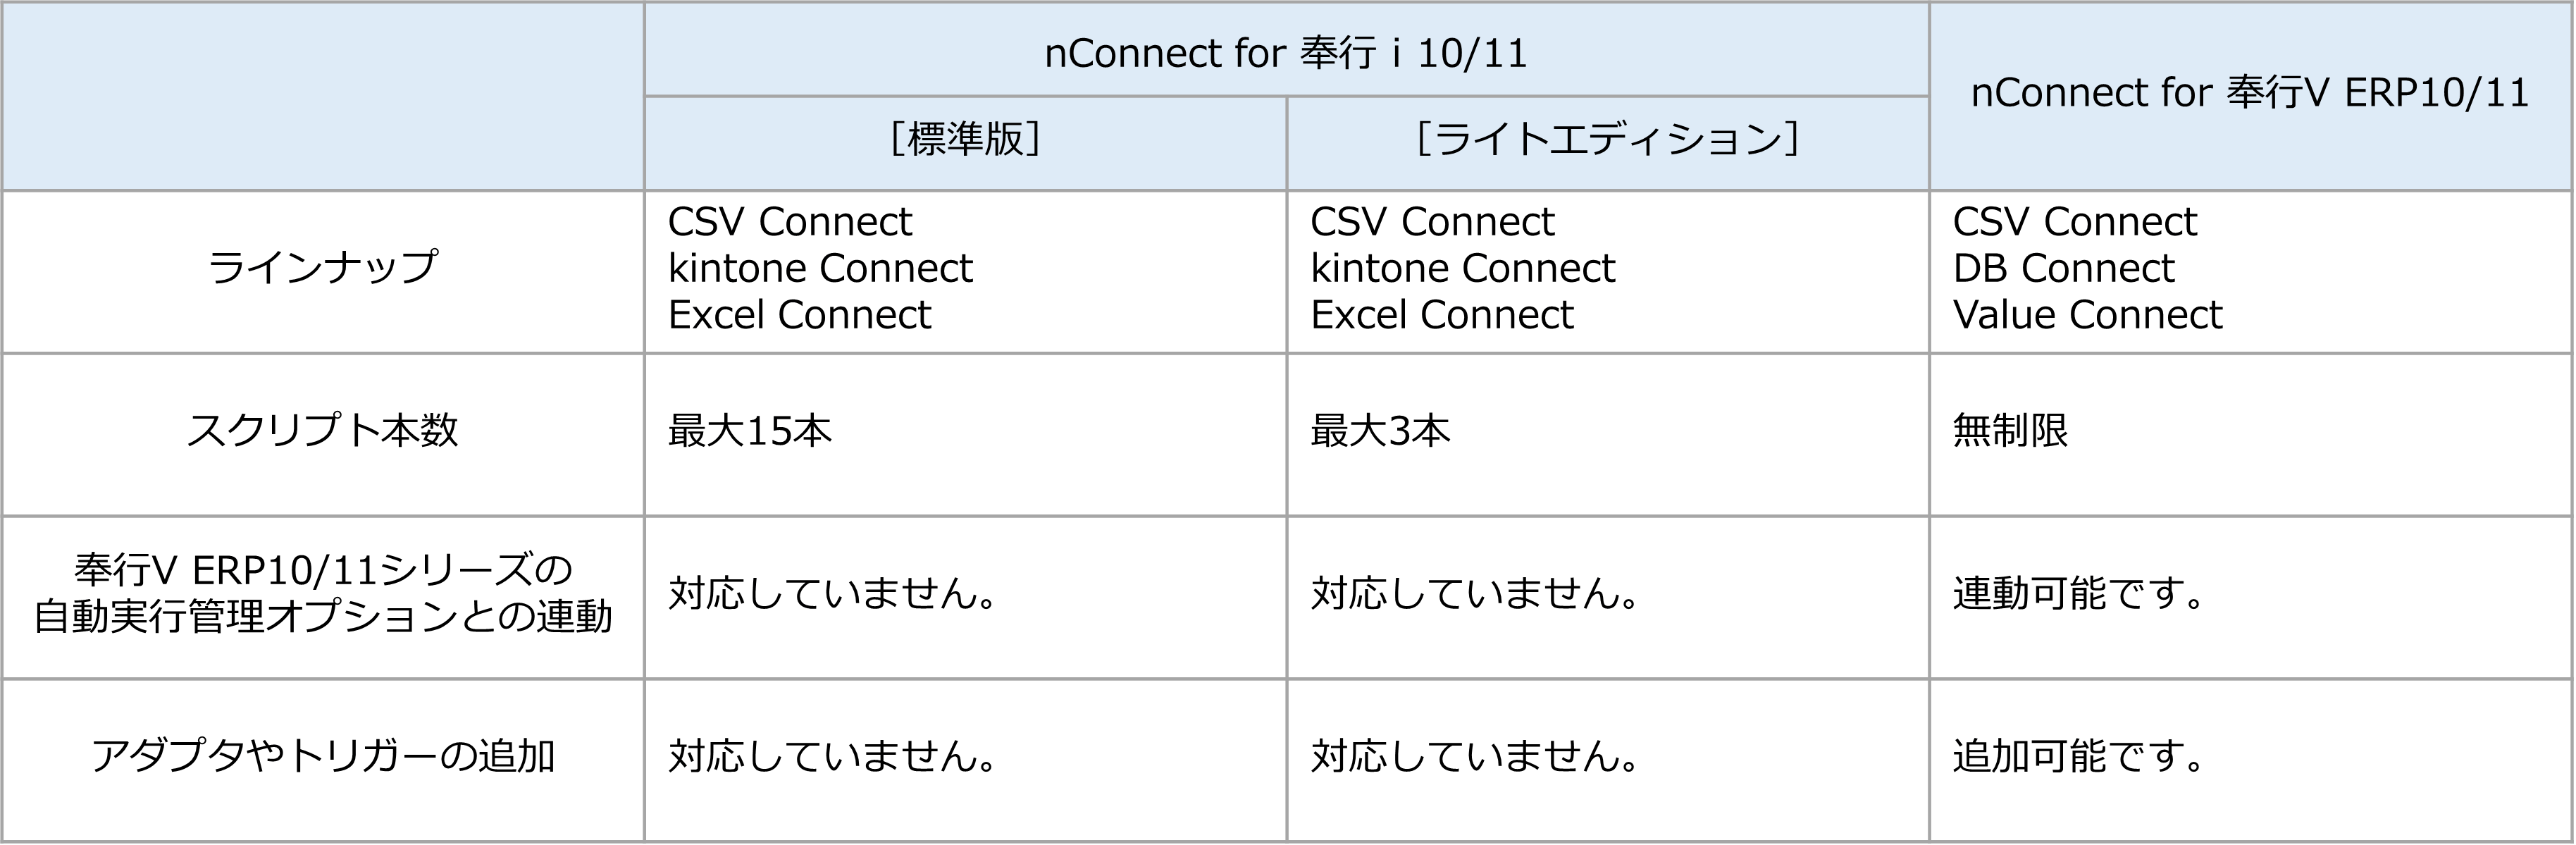 nConnect for 奉行i10・11シリーズと、nConnect for 奉行V ERP10・11シリーズの違いは何ですか?